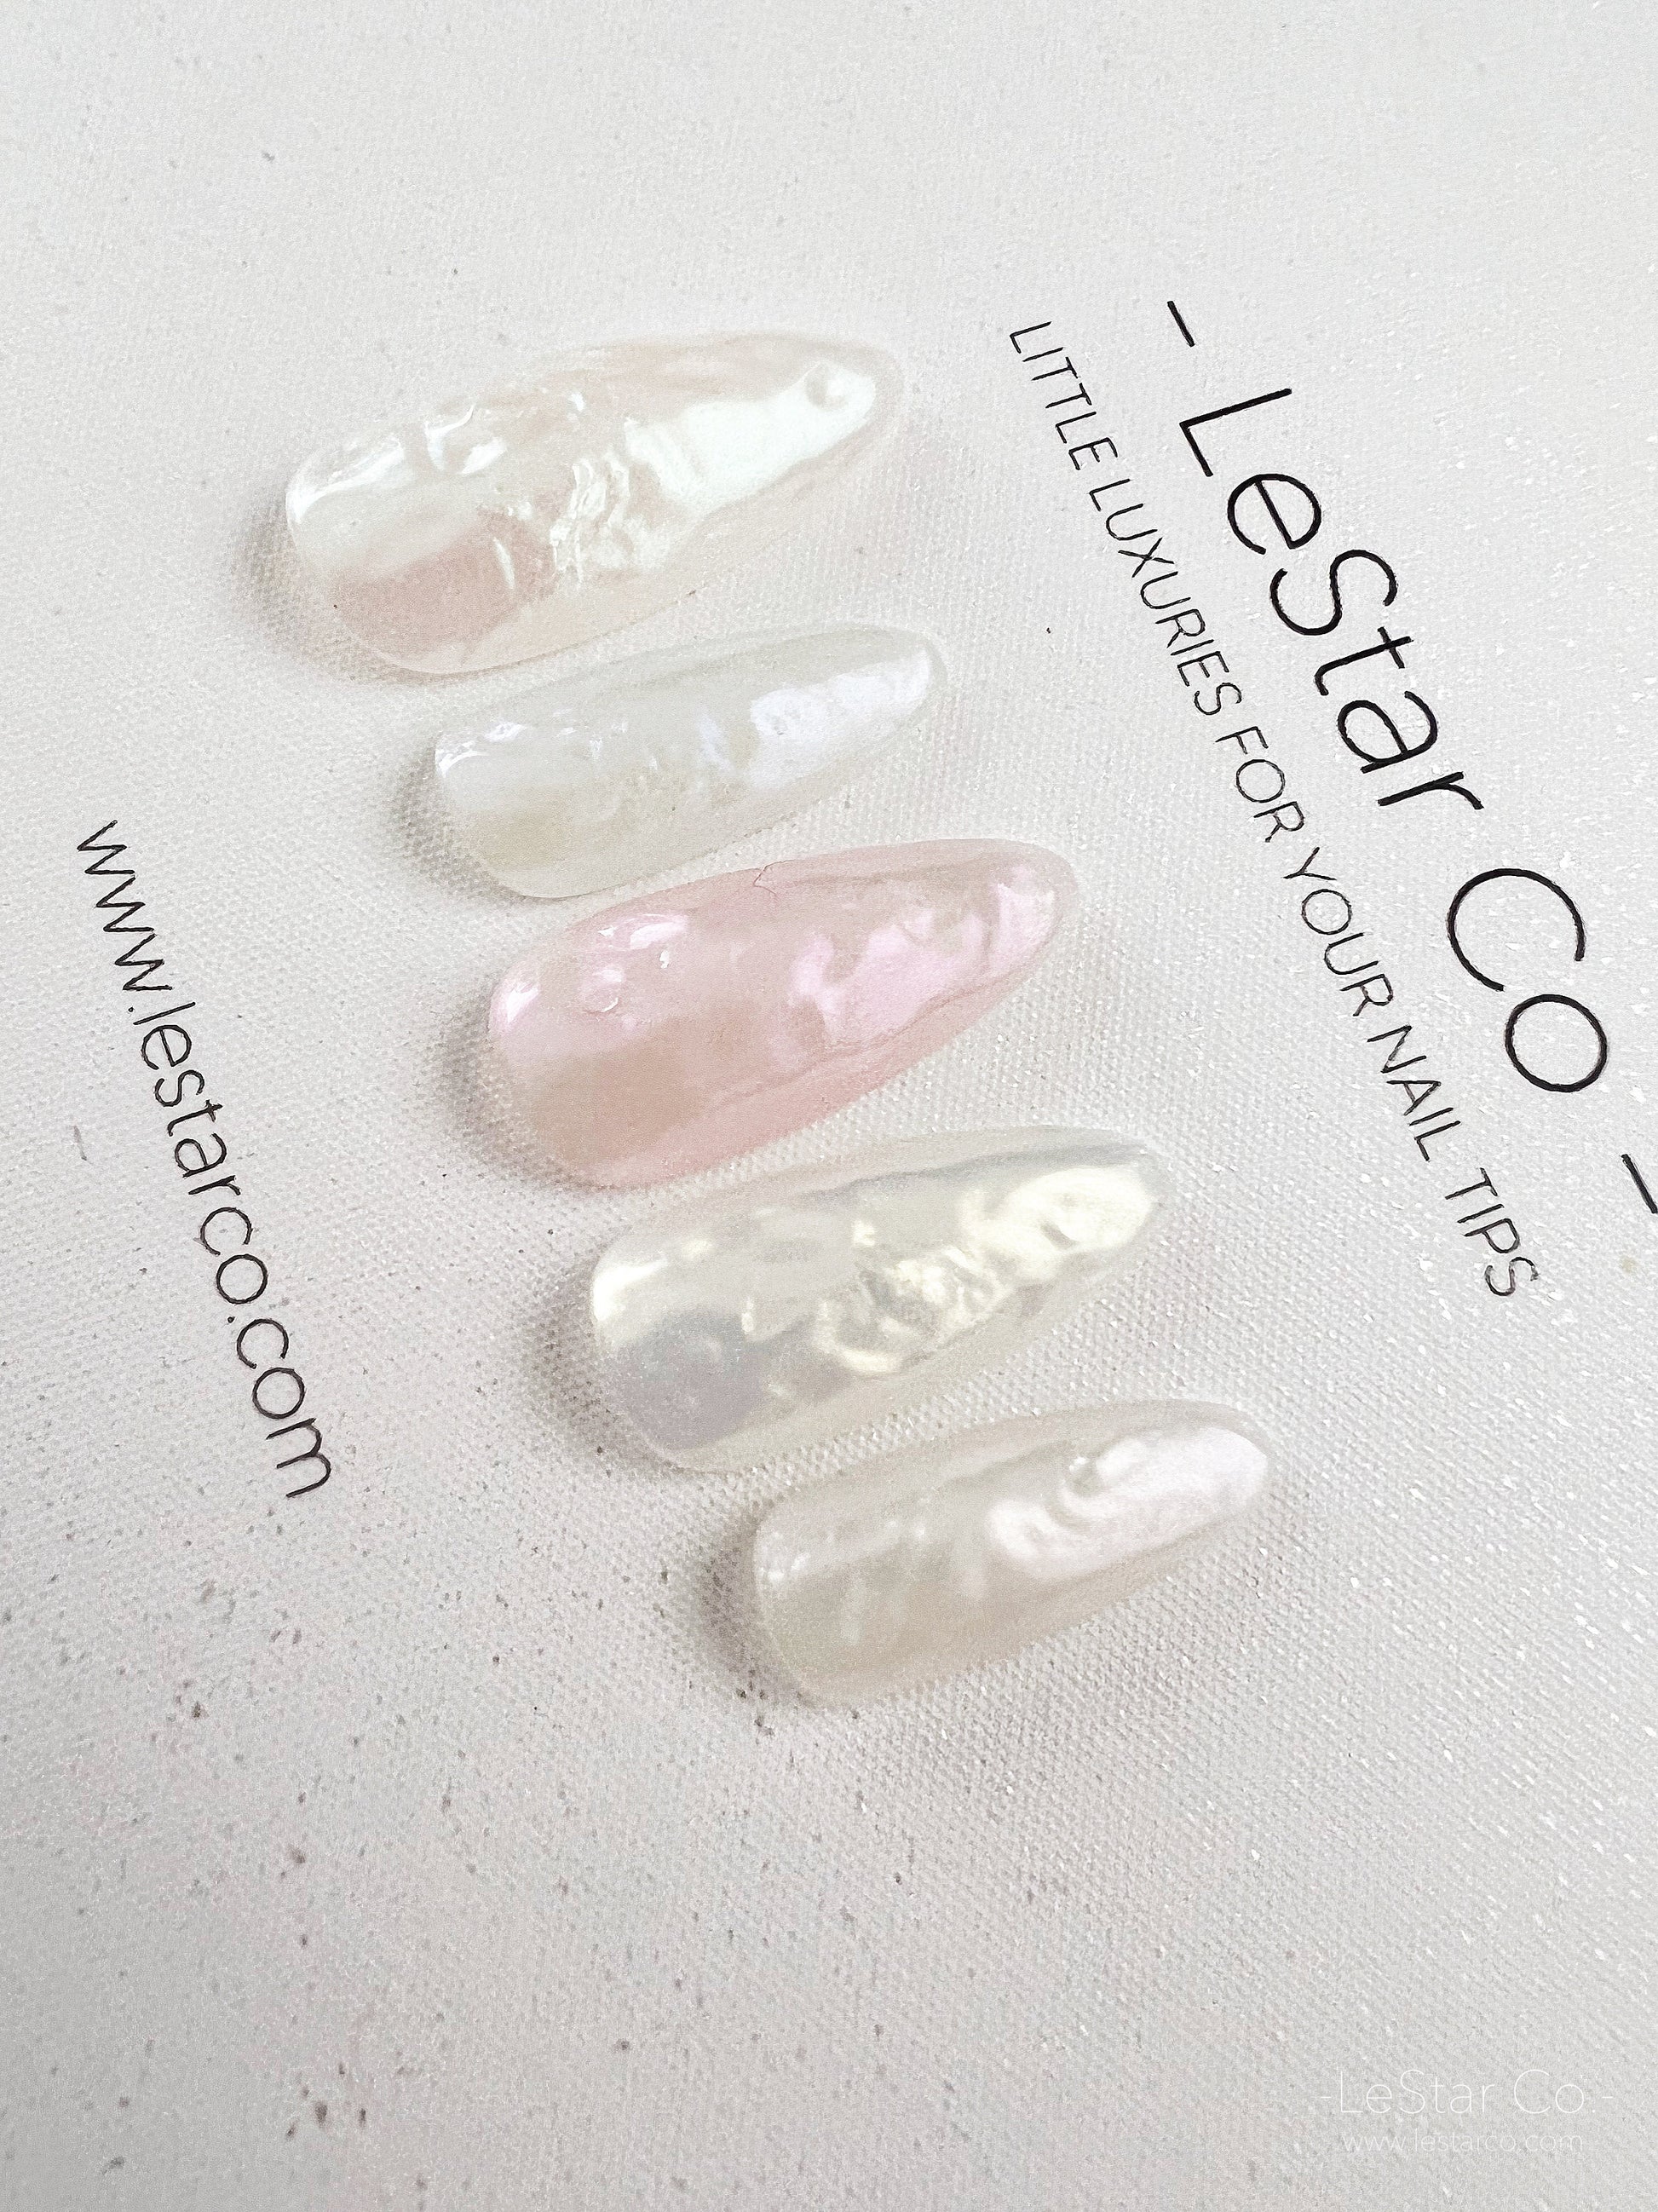 Reusable Pearl | Premium Press on Nails Gel Manicure | Fake Nails | Handmade | Lestarco faux nails 149zz